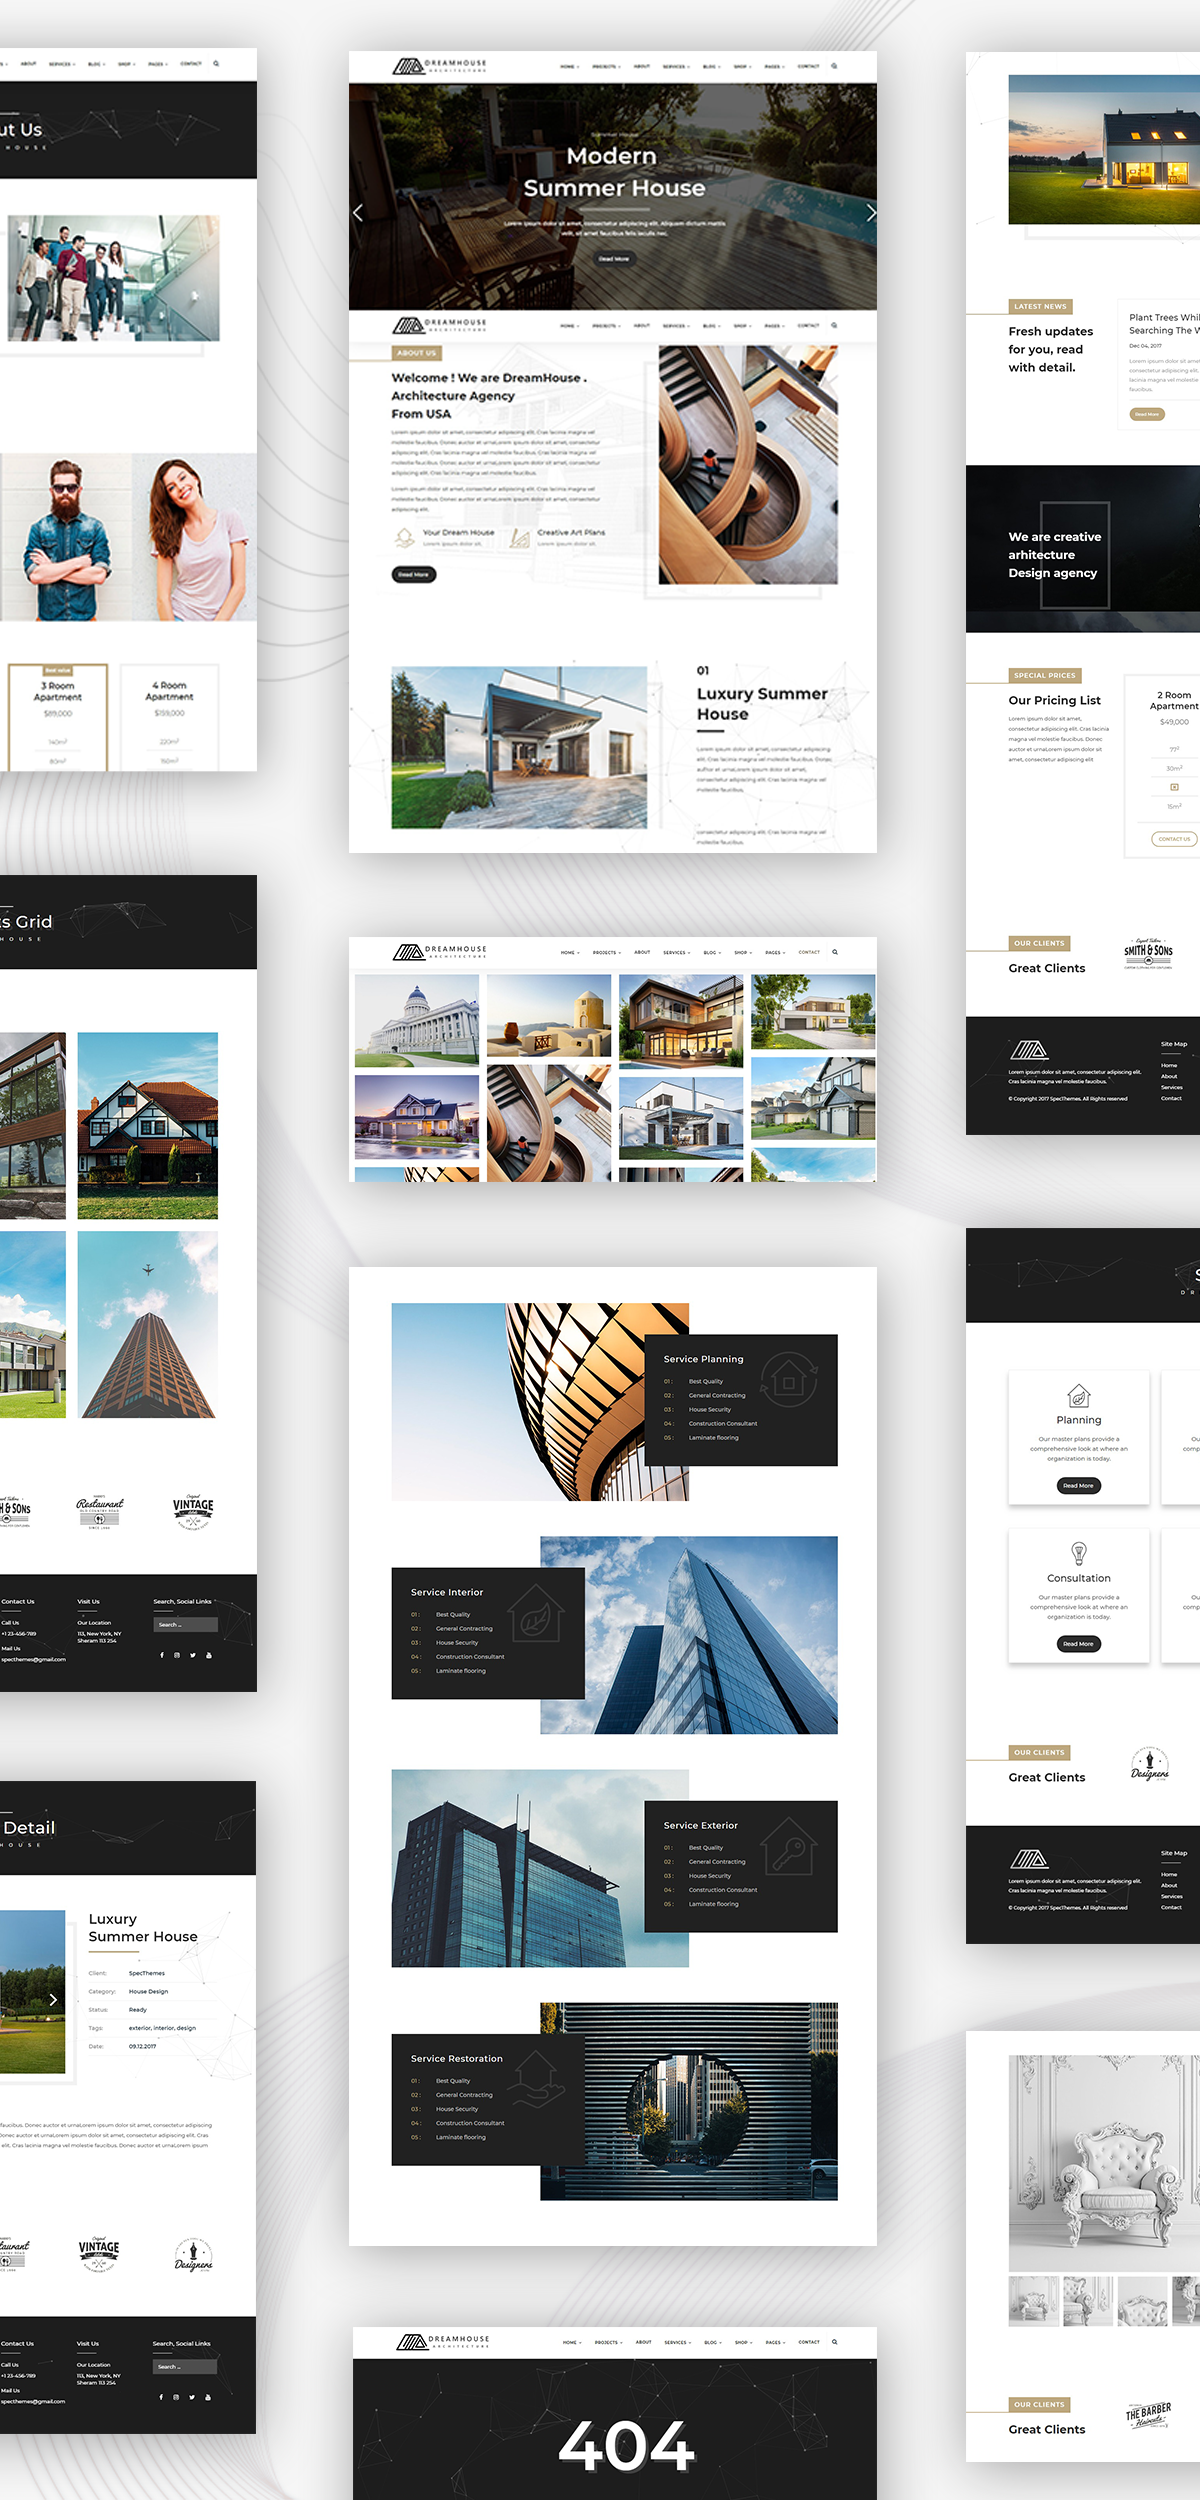 Stargaze - Architektur & Interieur WordPress Template - 1